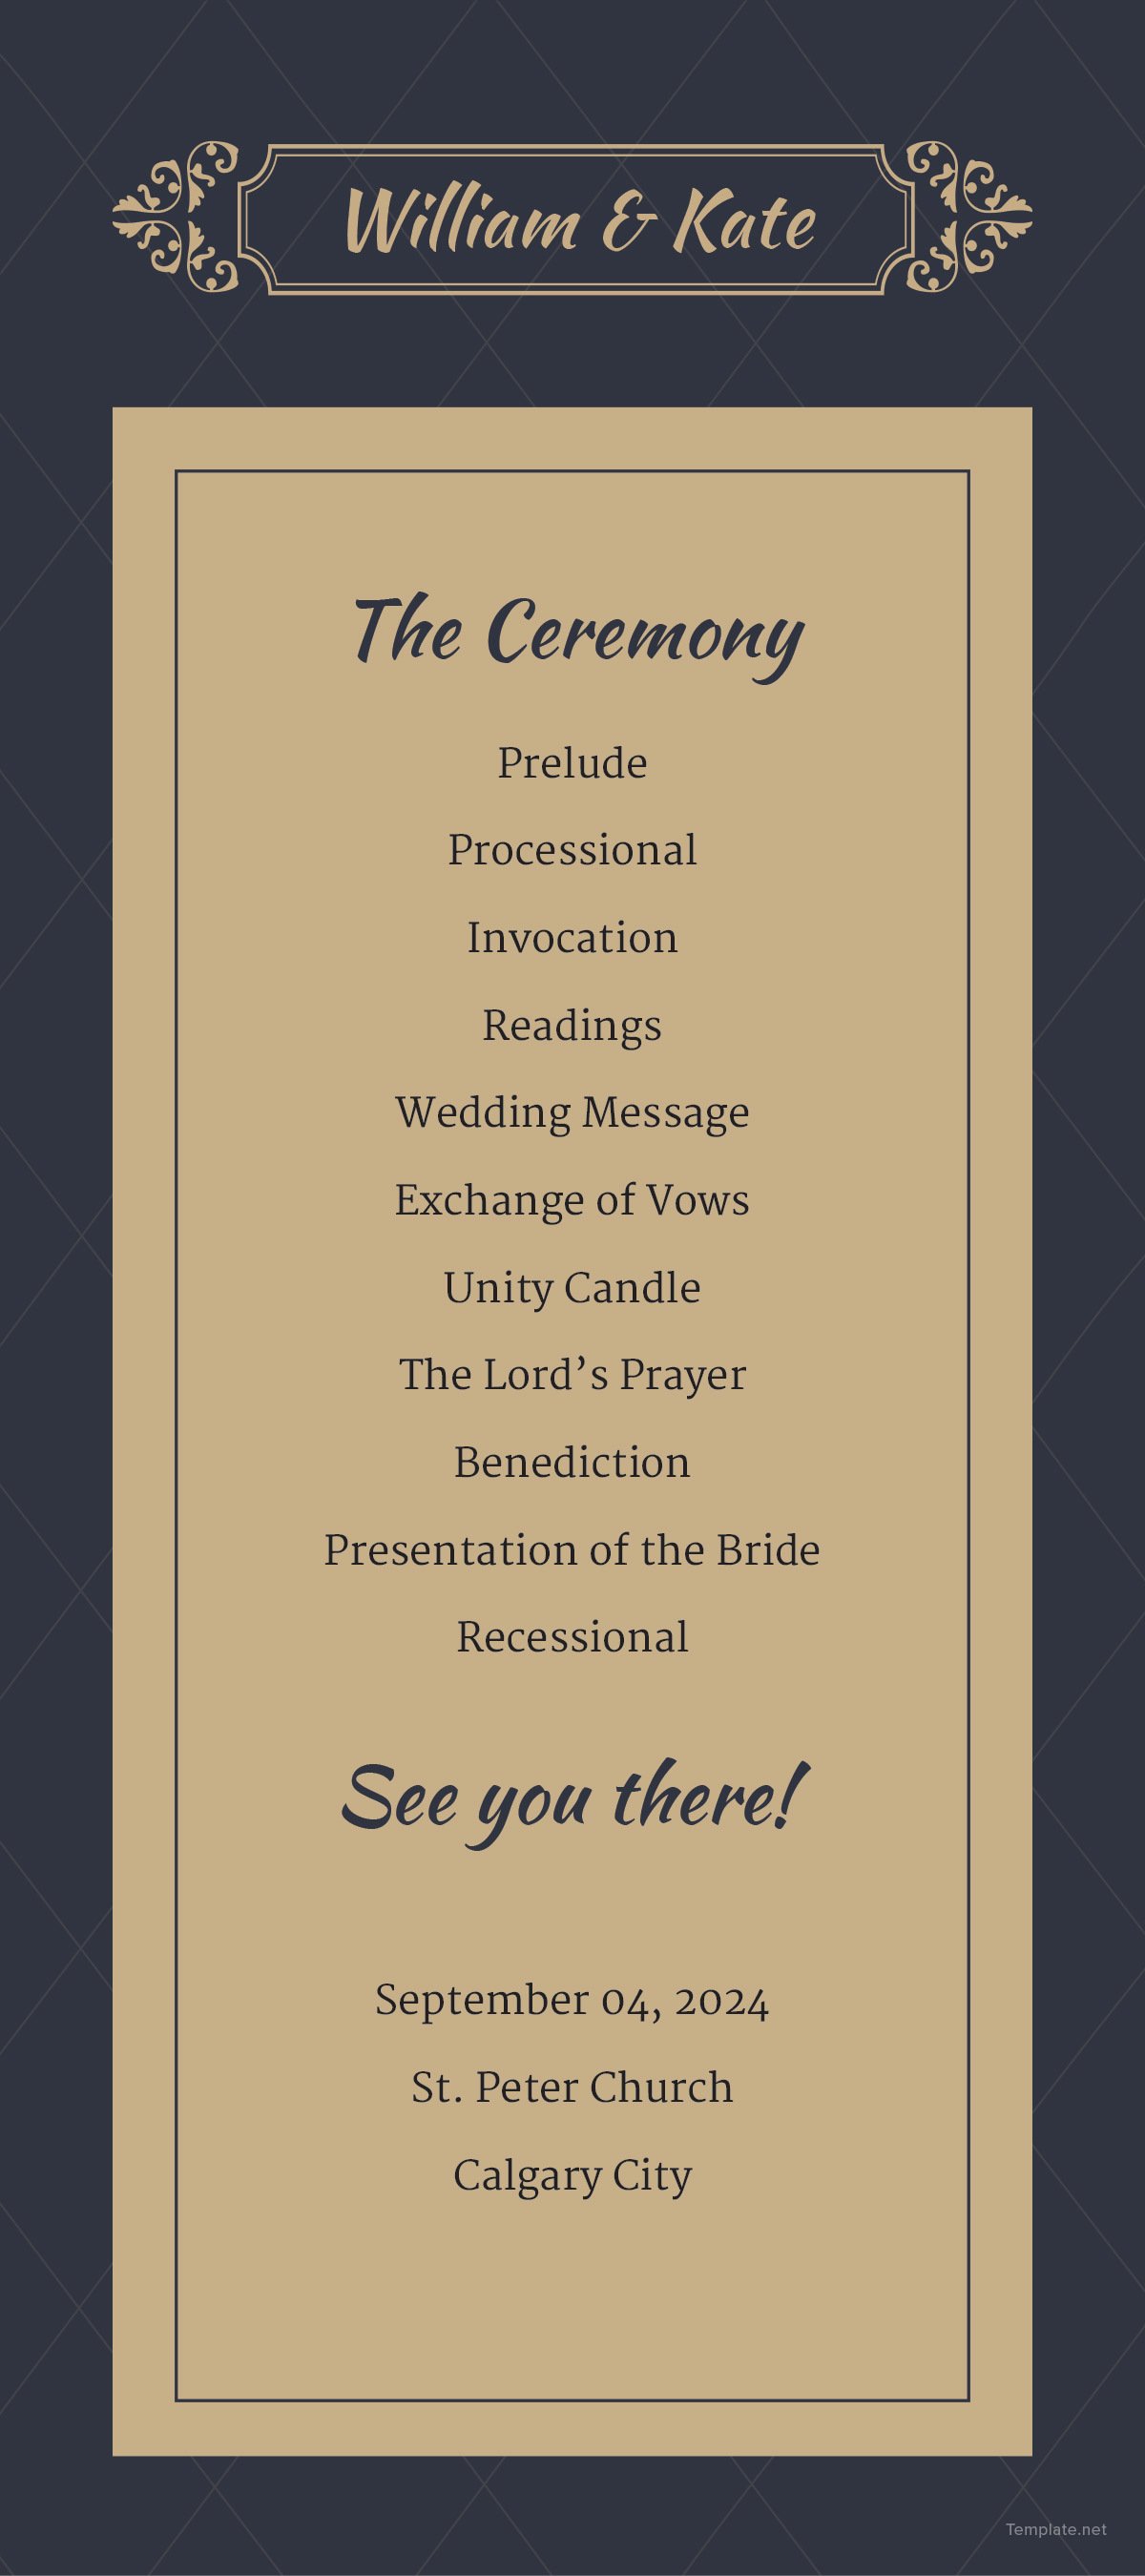 Traditional Wedding Program Template in Adobe Photoshop 